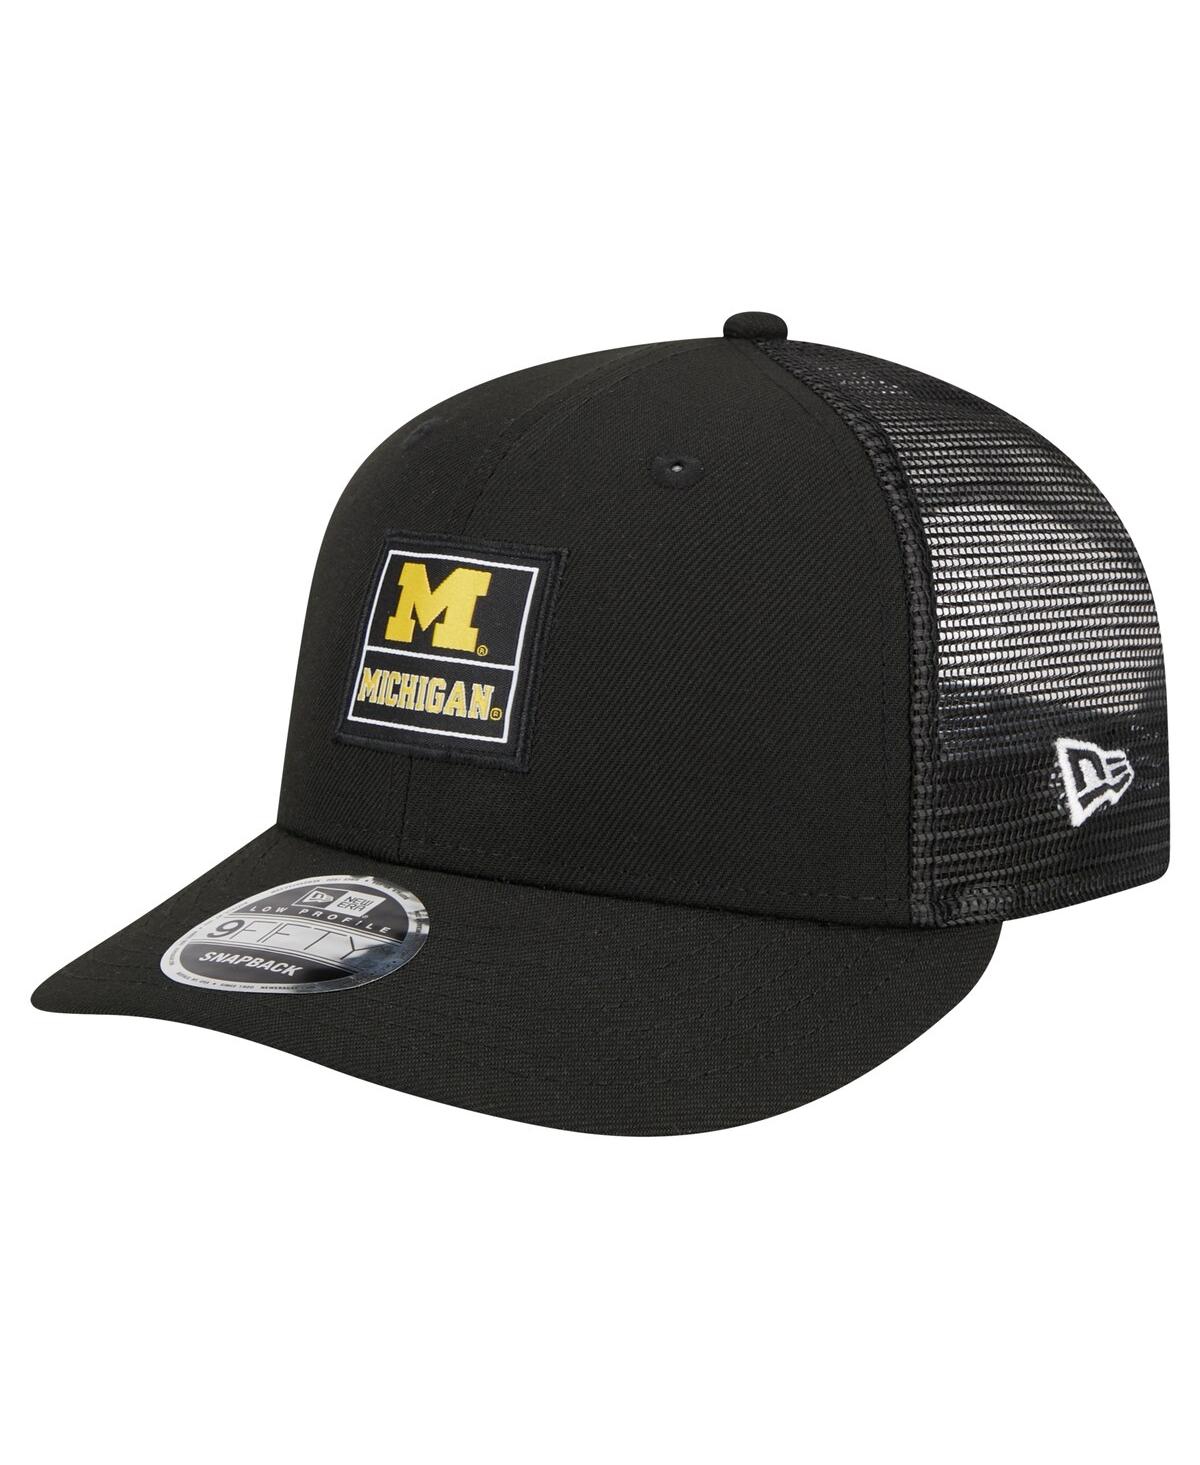 Shop New Era Men's Black Michigan Wolverines Labeled 9fifty Snapback Hat